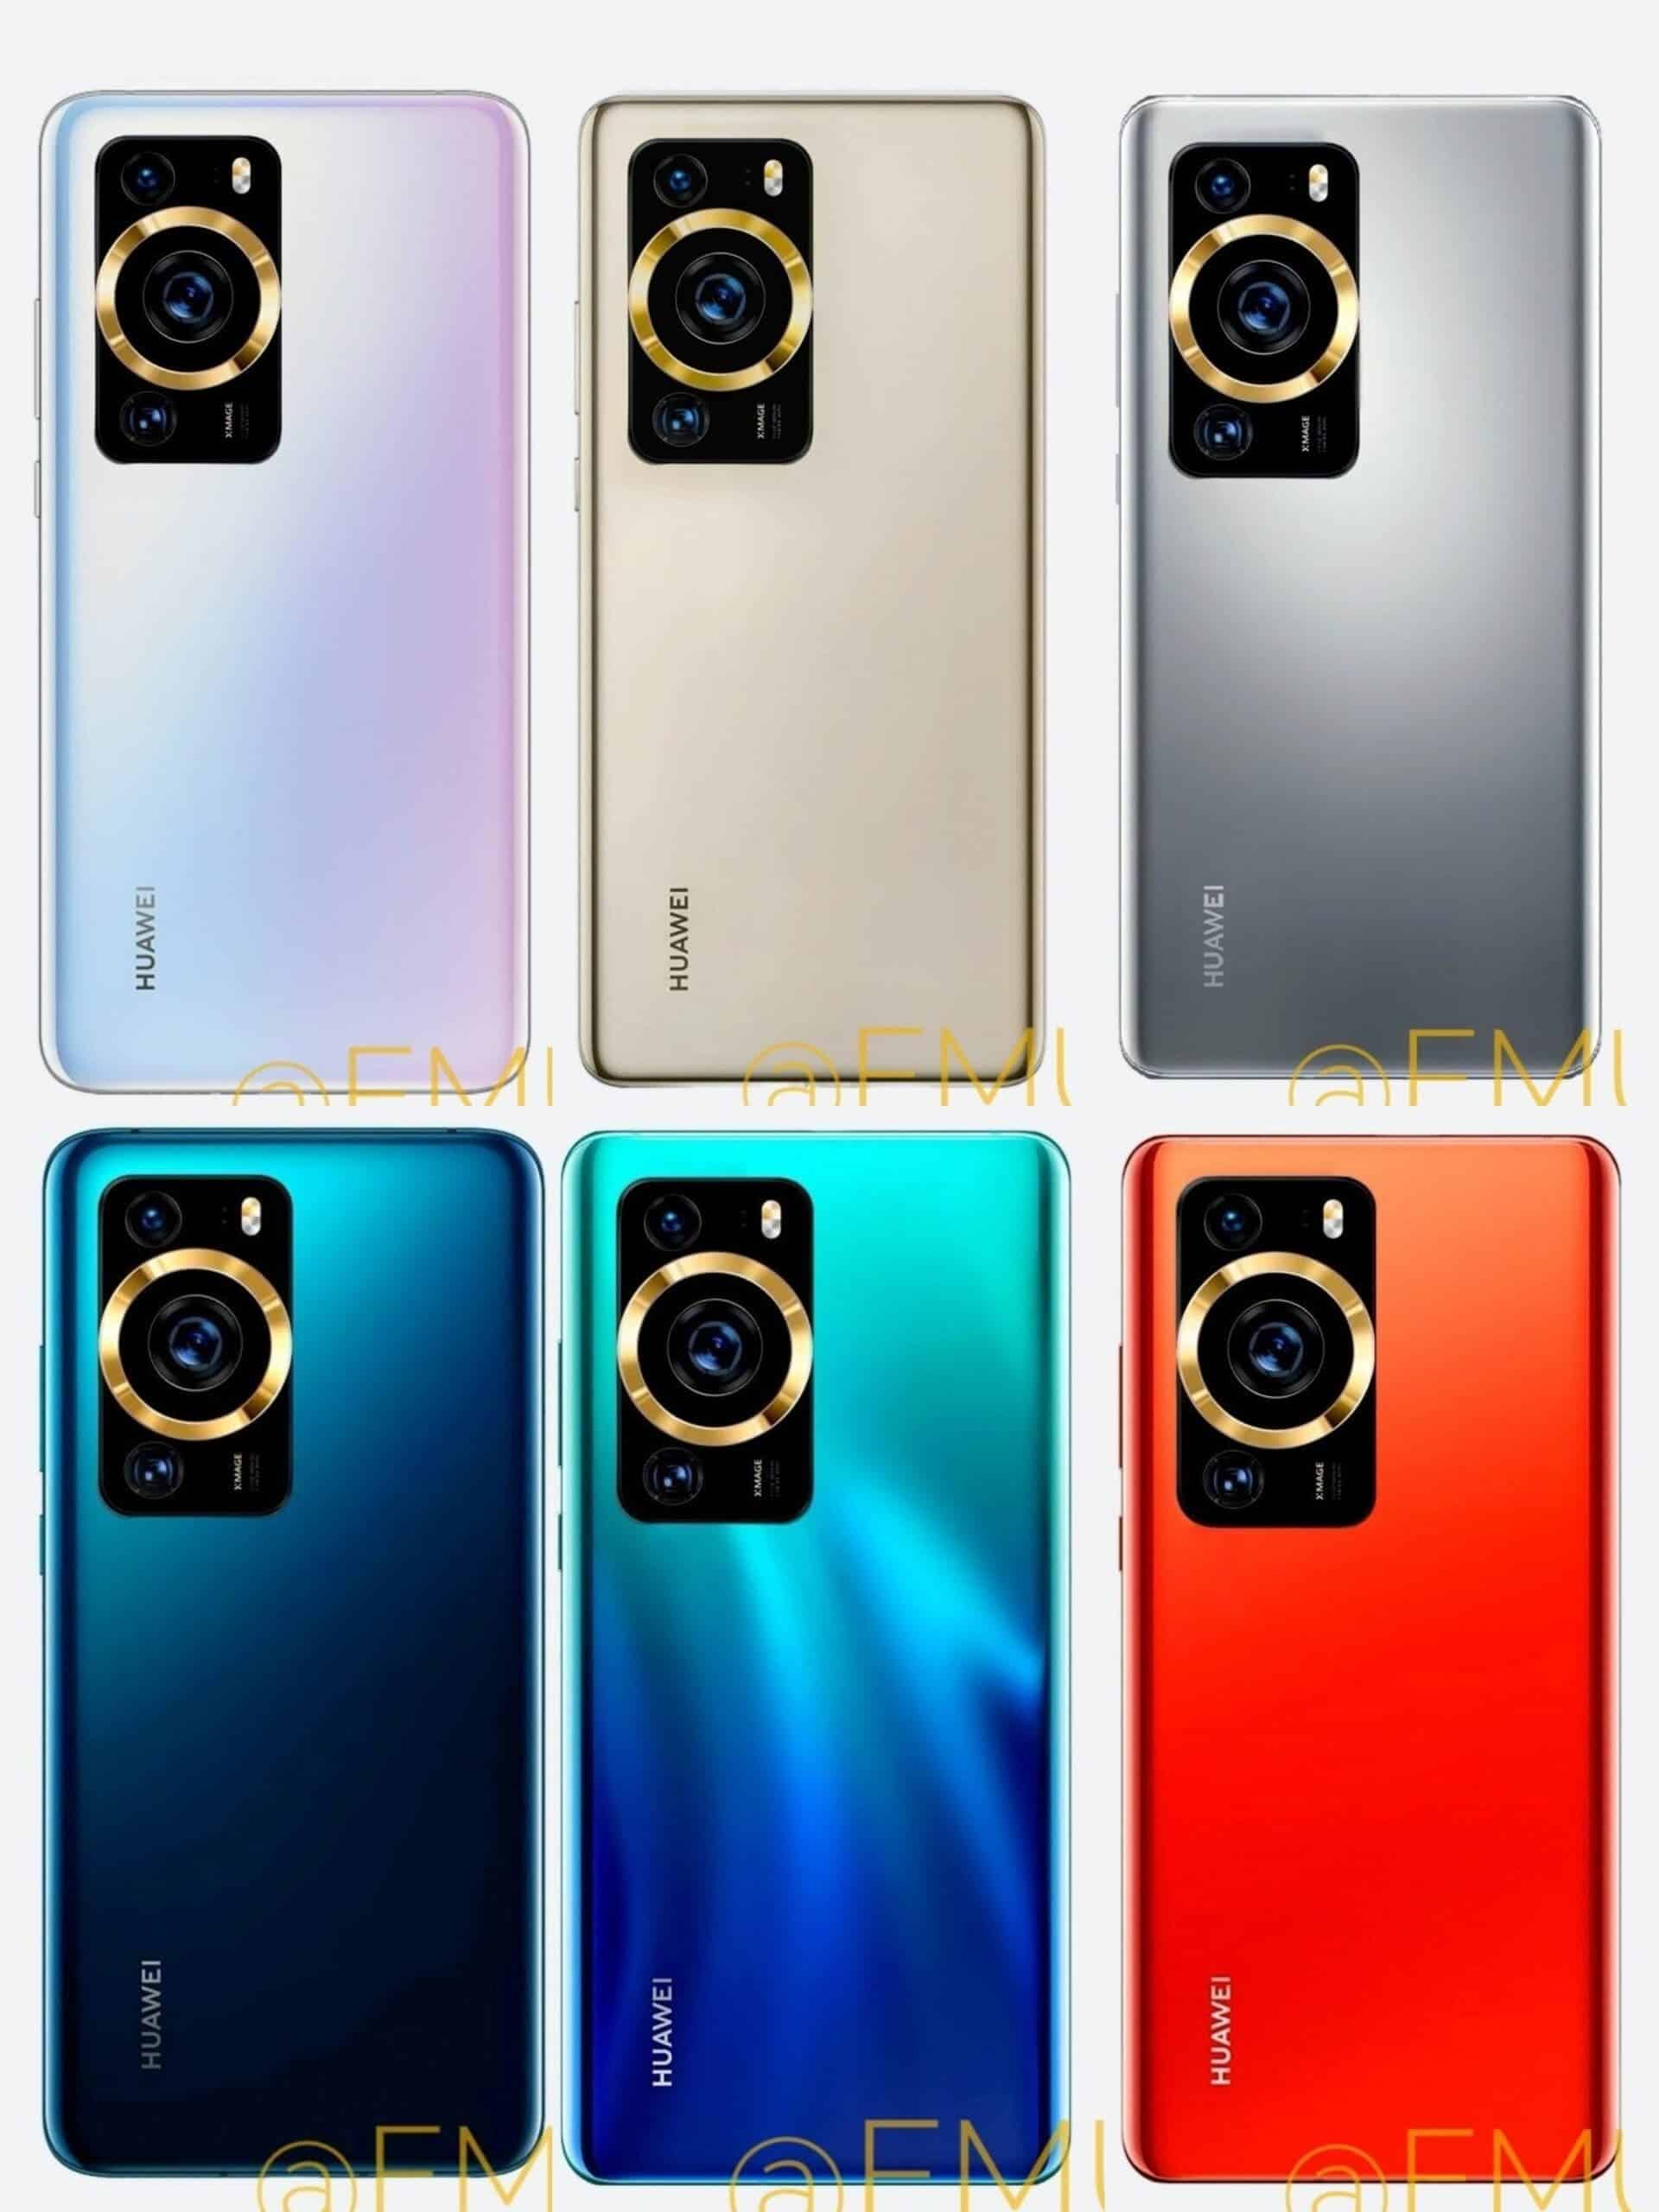 king of HarmonyOS mobile phones is here: Huawei P60 key details revealed - Gizchina.com